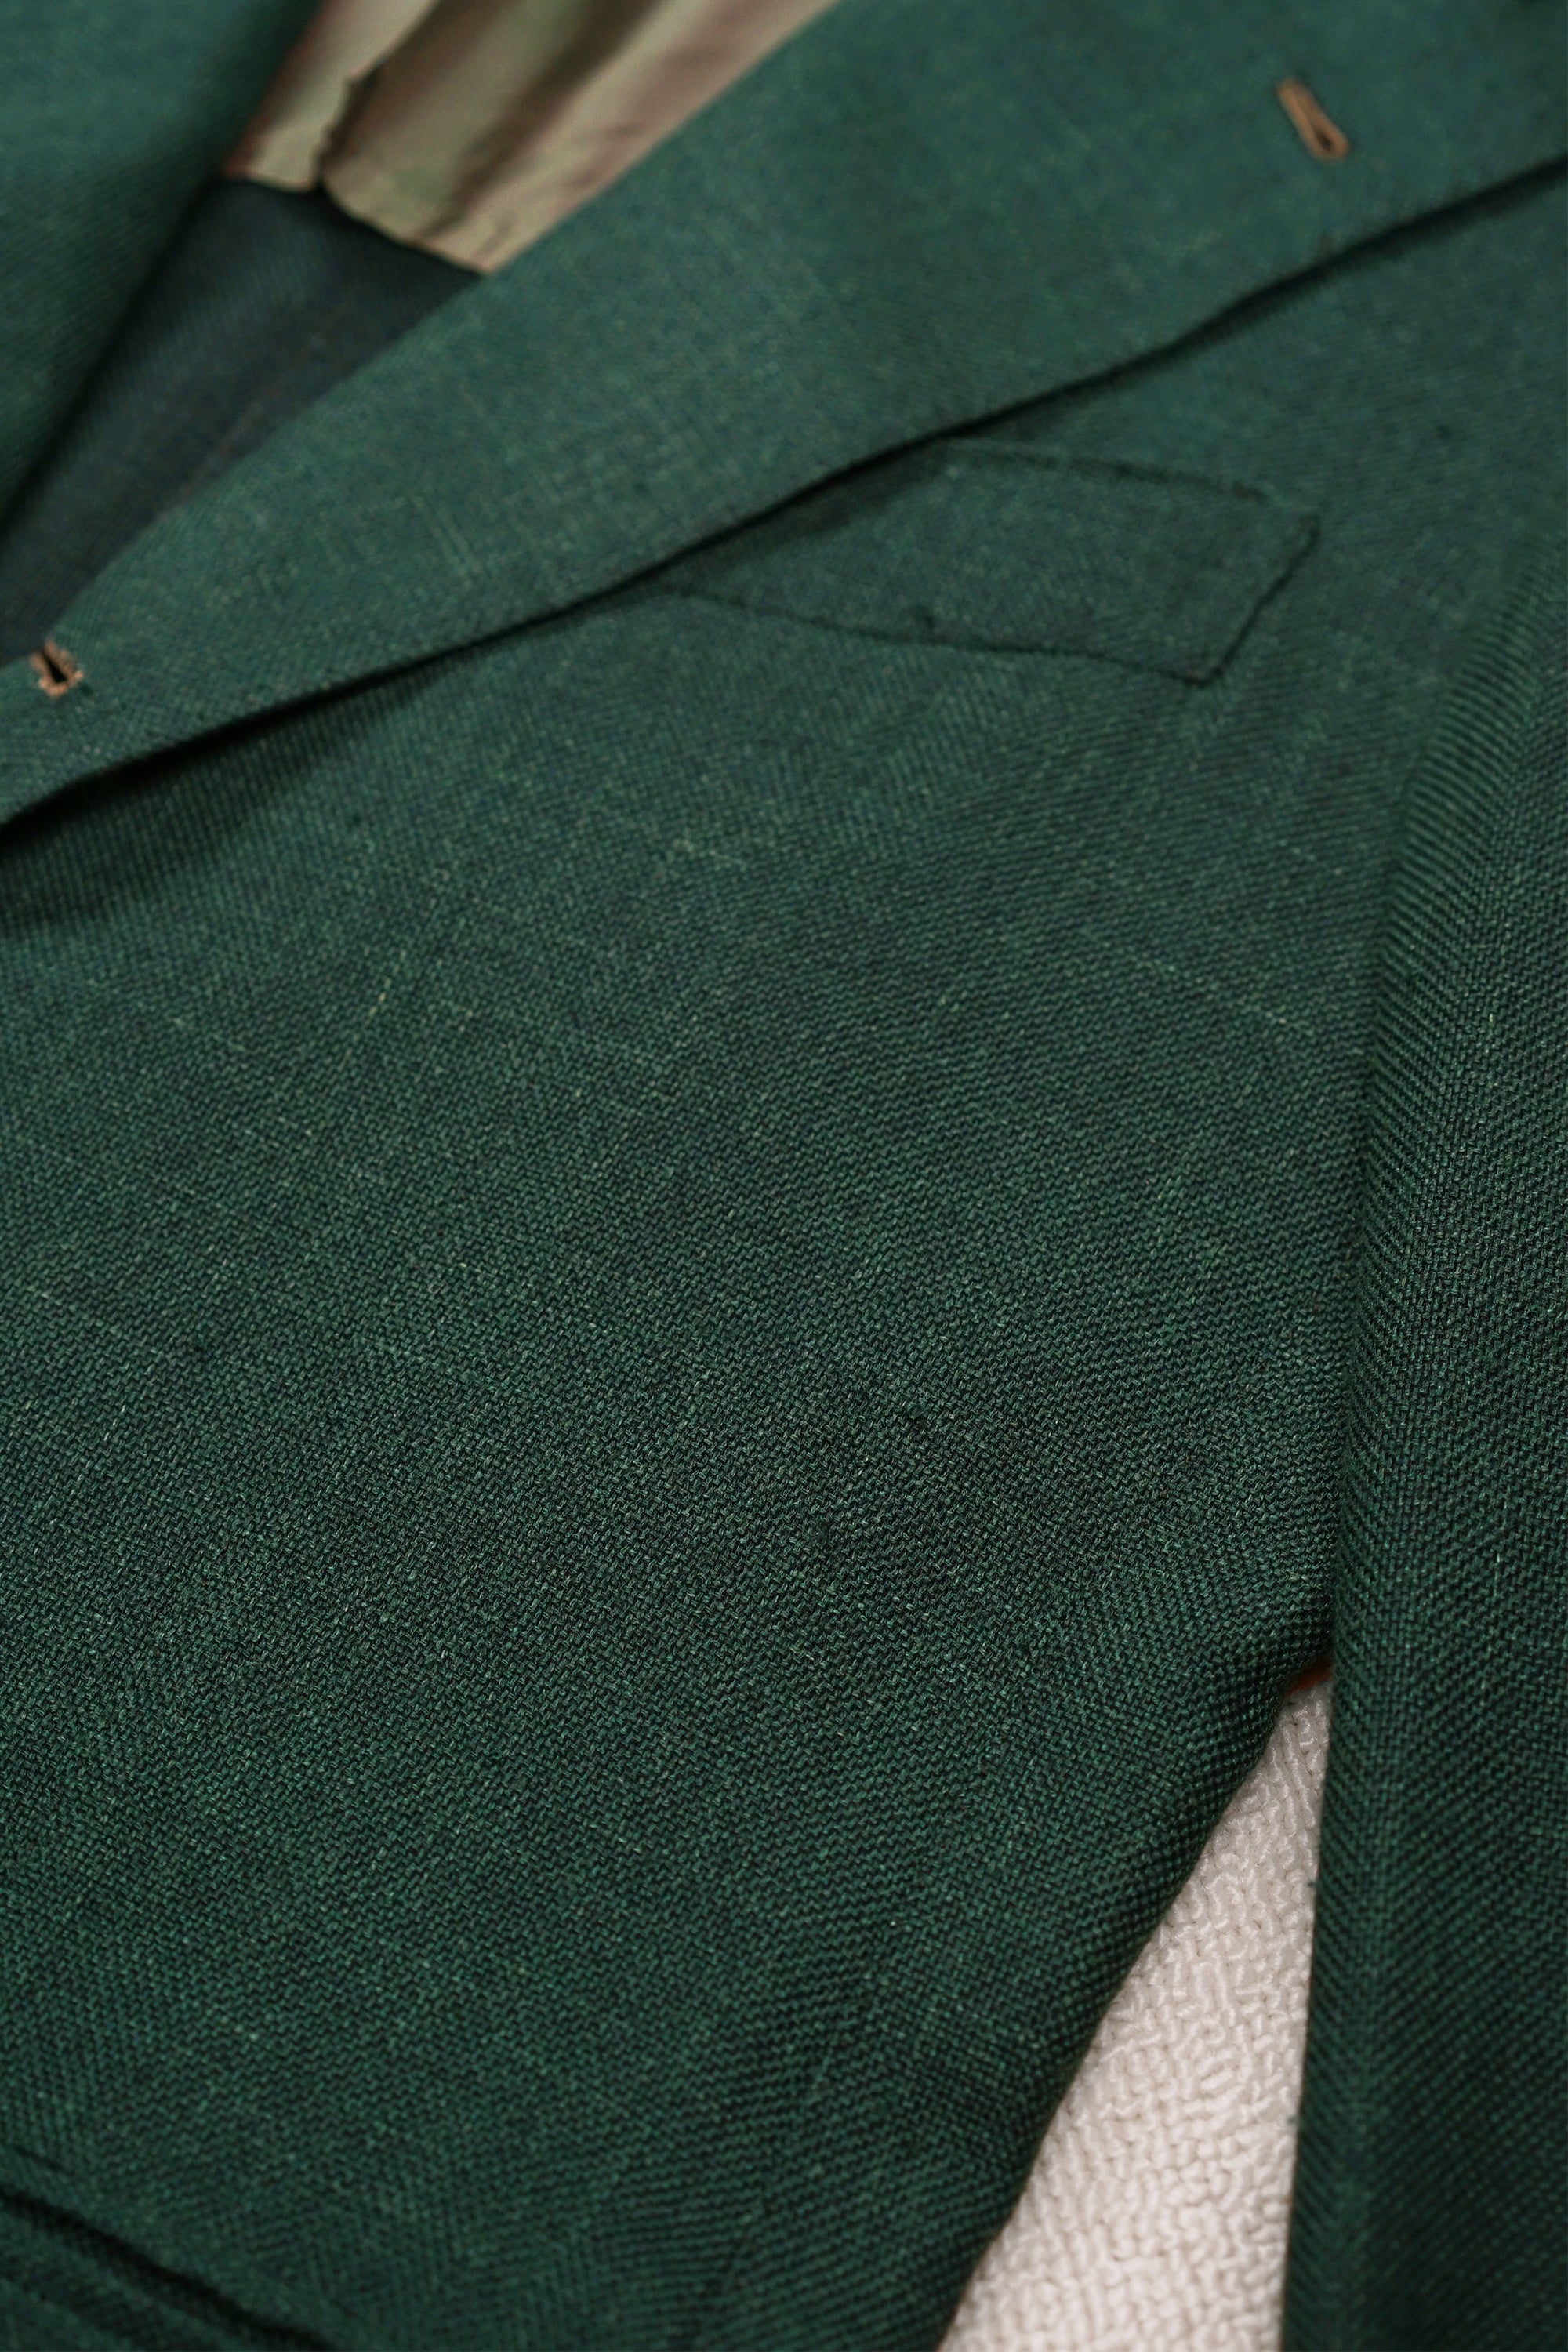 Orazio Luciano Green Wool Hopsack Sport Coat